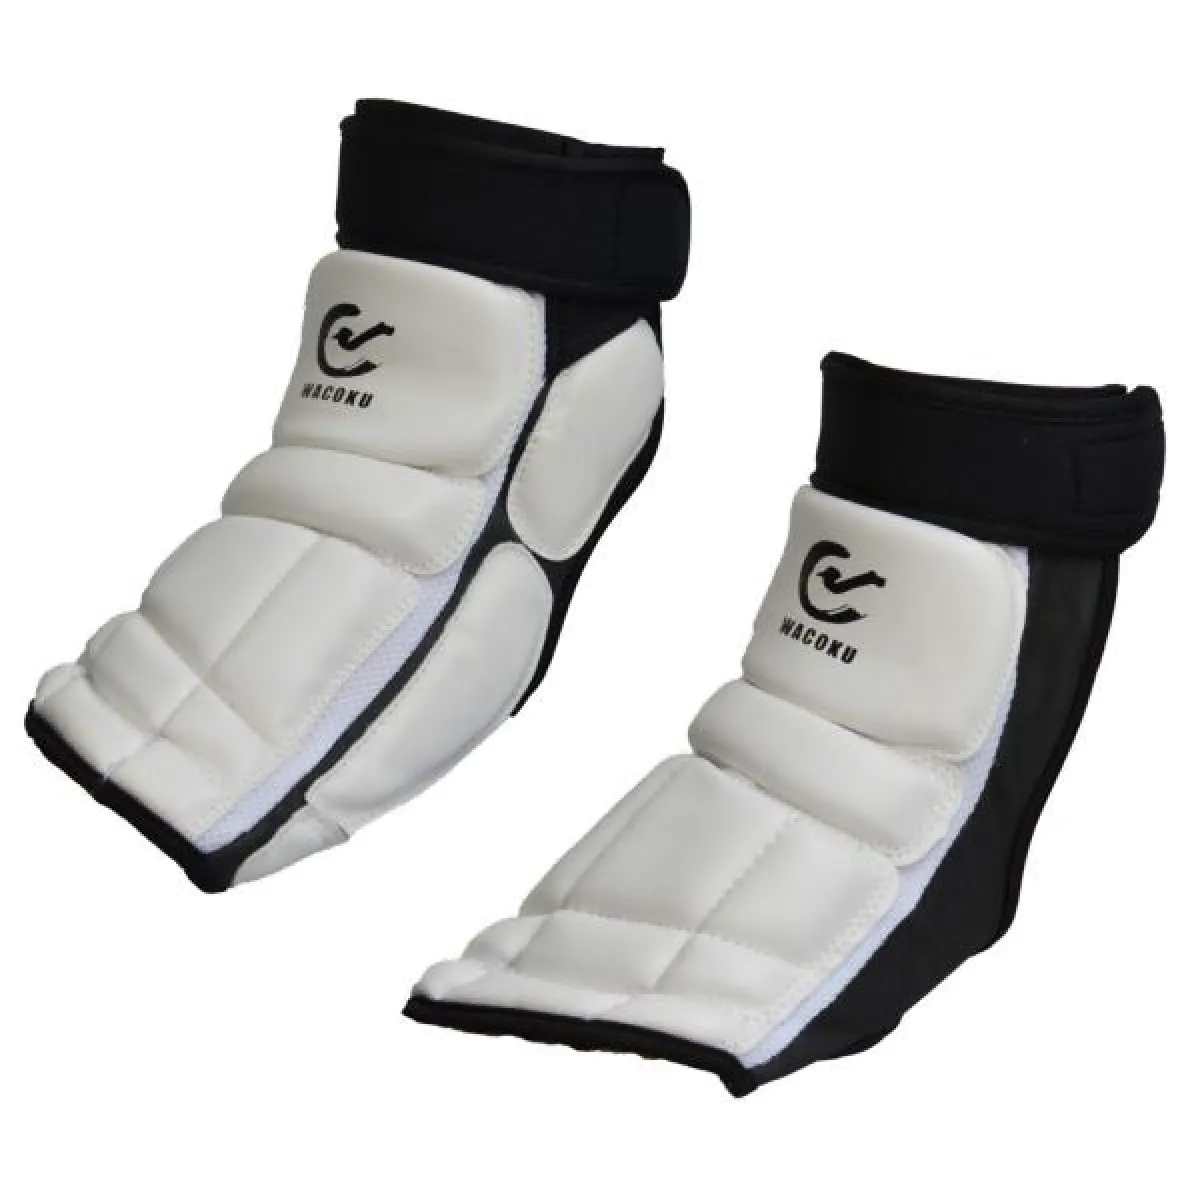 Taekwondo WT foot protection